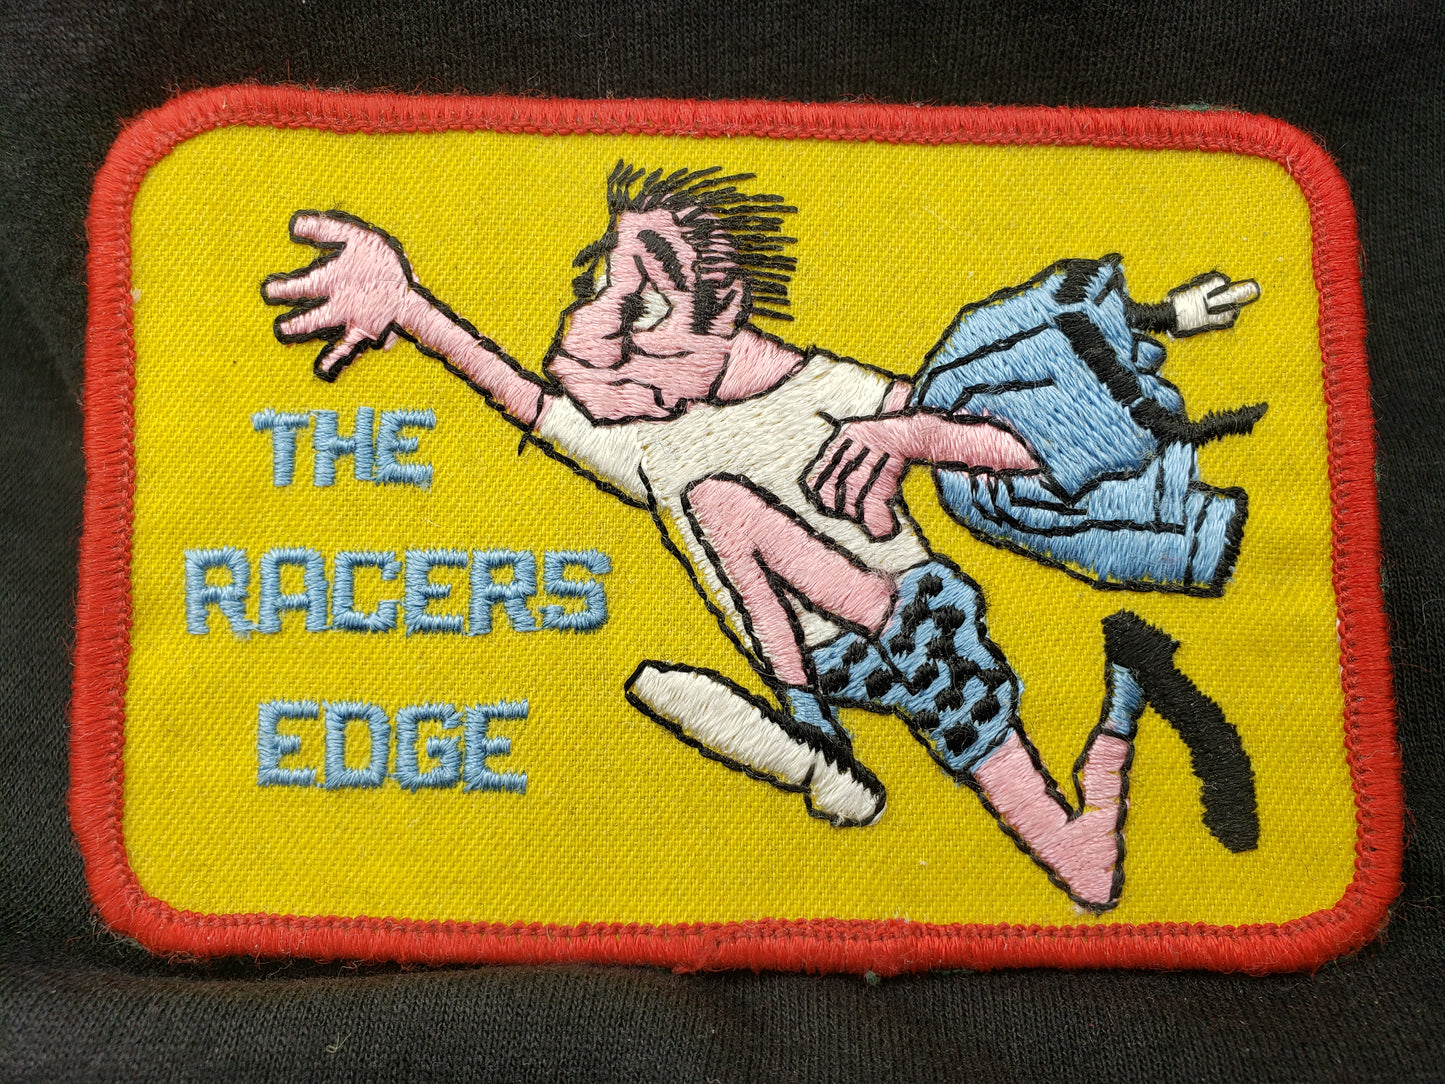 "The Racers Edge" vintage patch